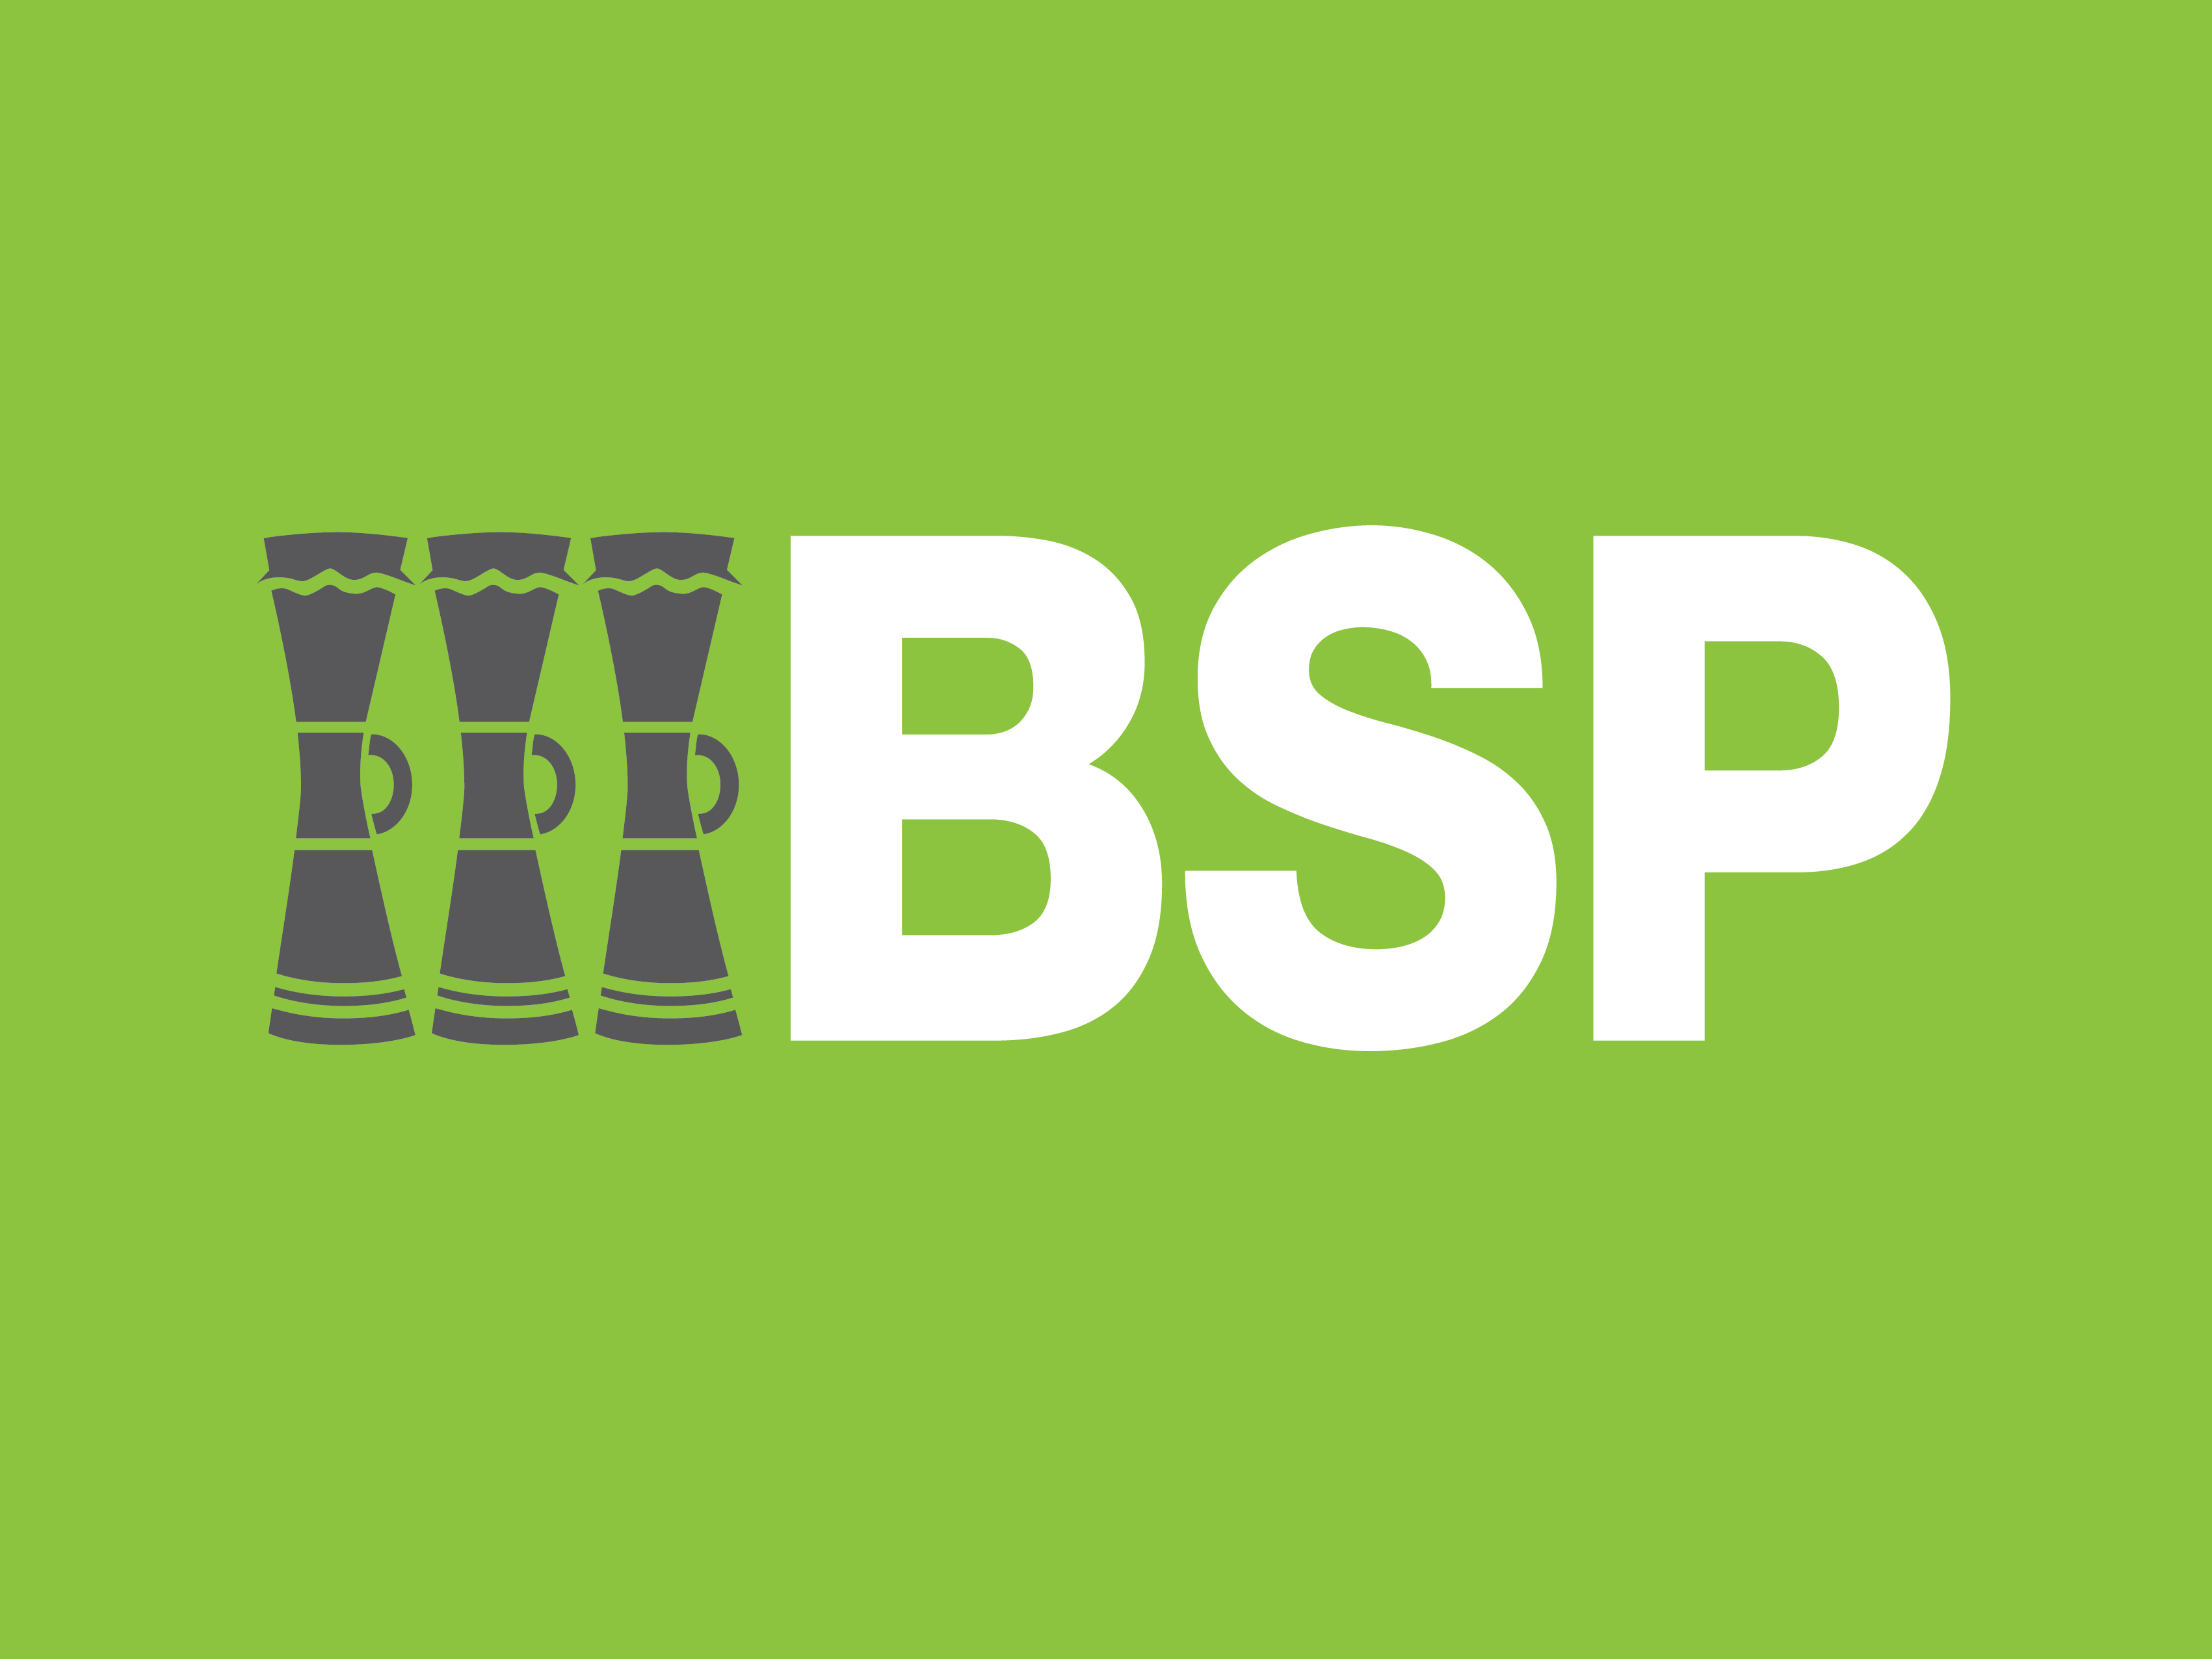 Logo BSP